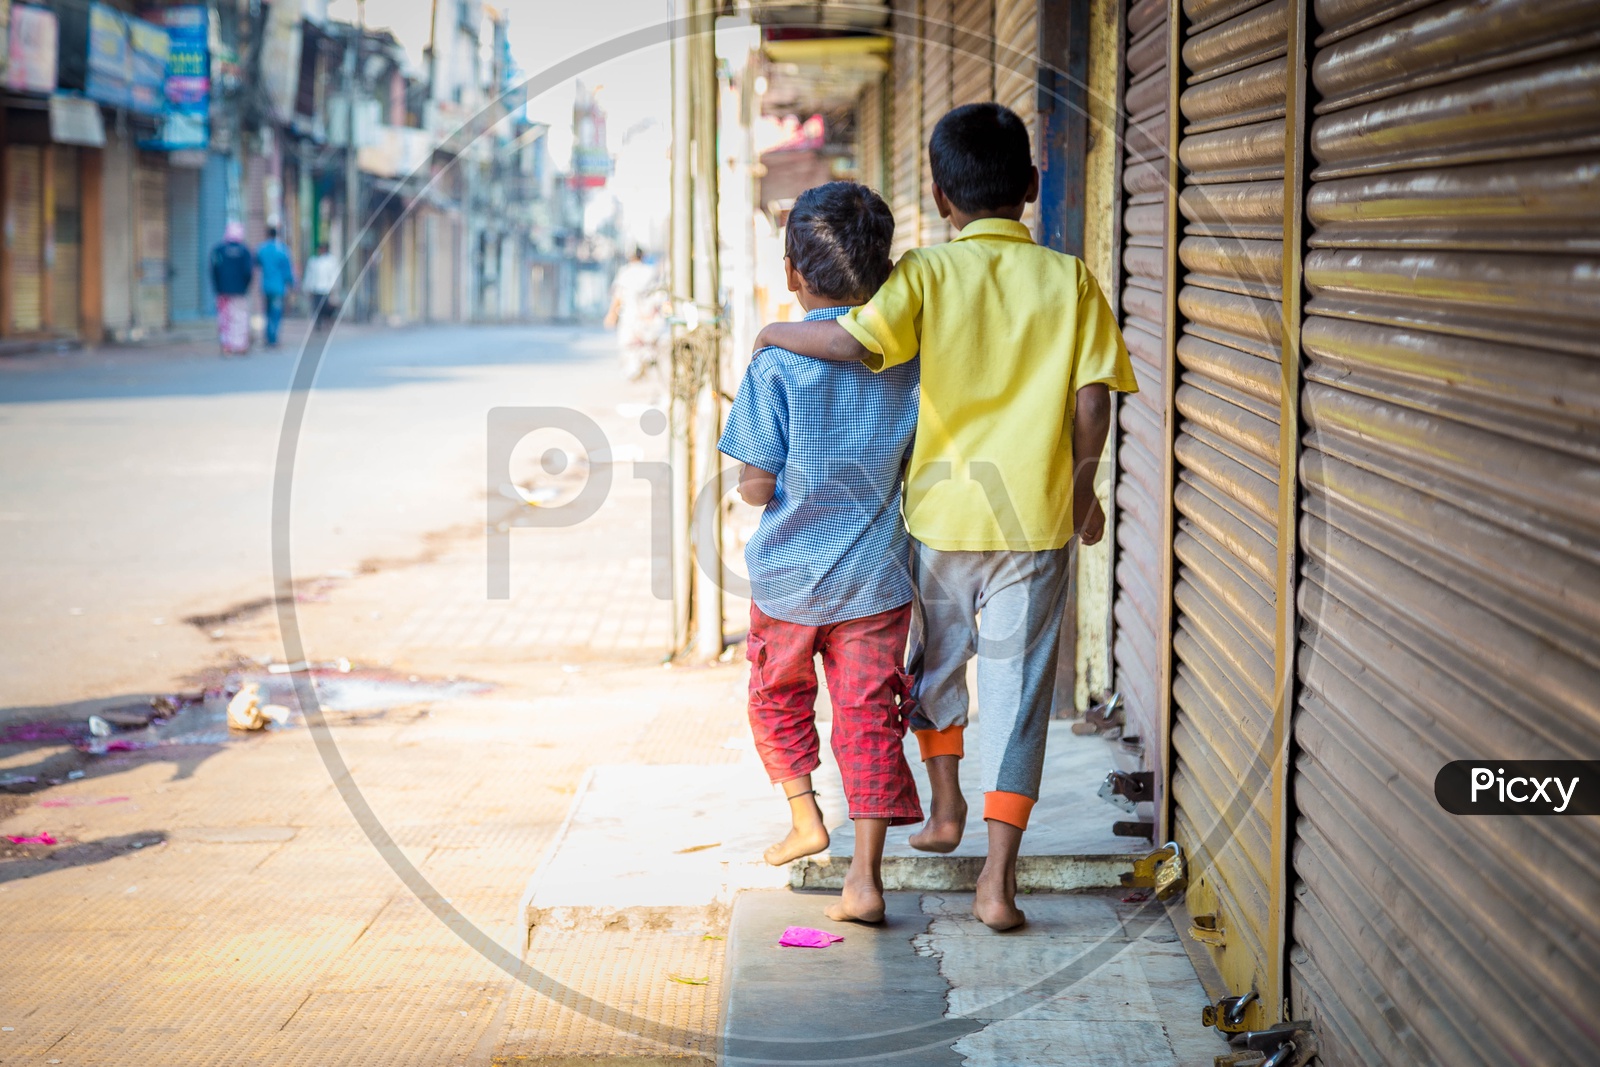 Two little kids walking by the shops in the street